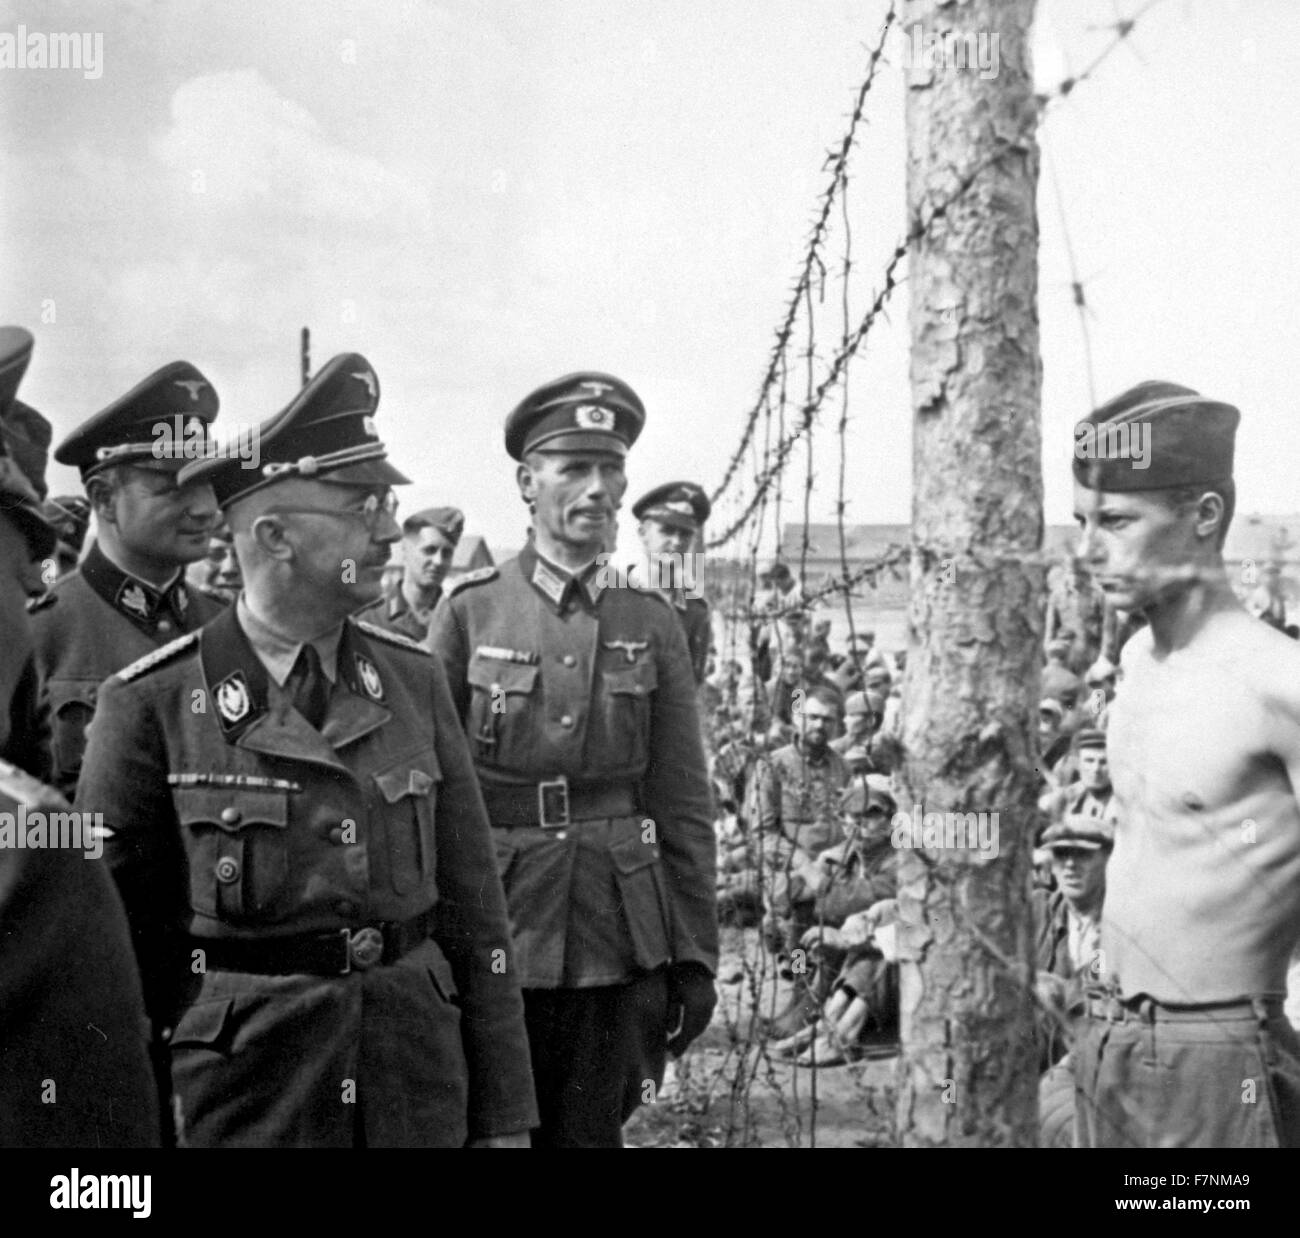 SS Chief Heinrich Himmler